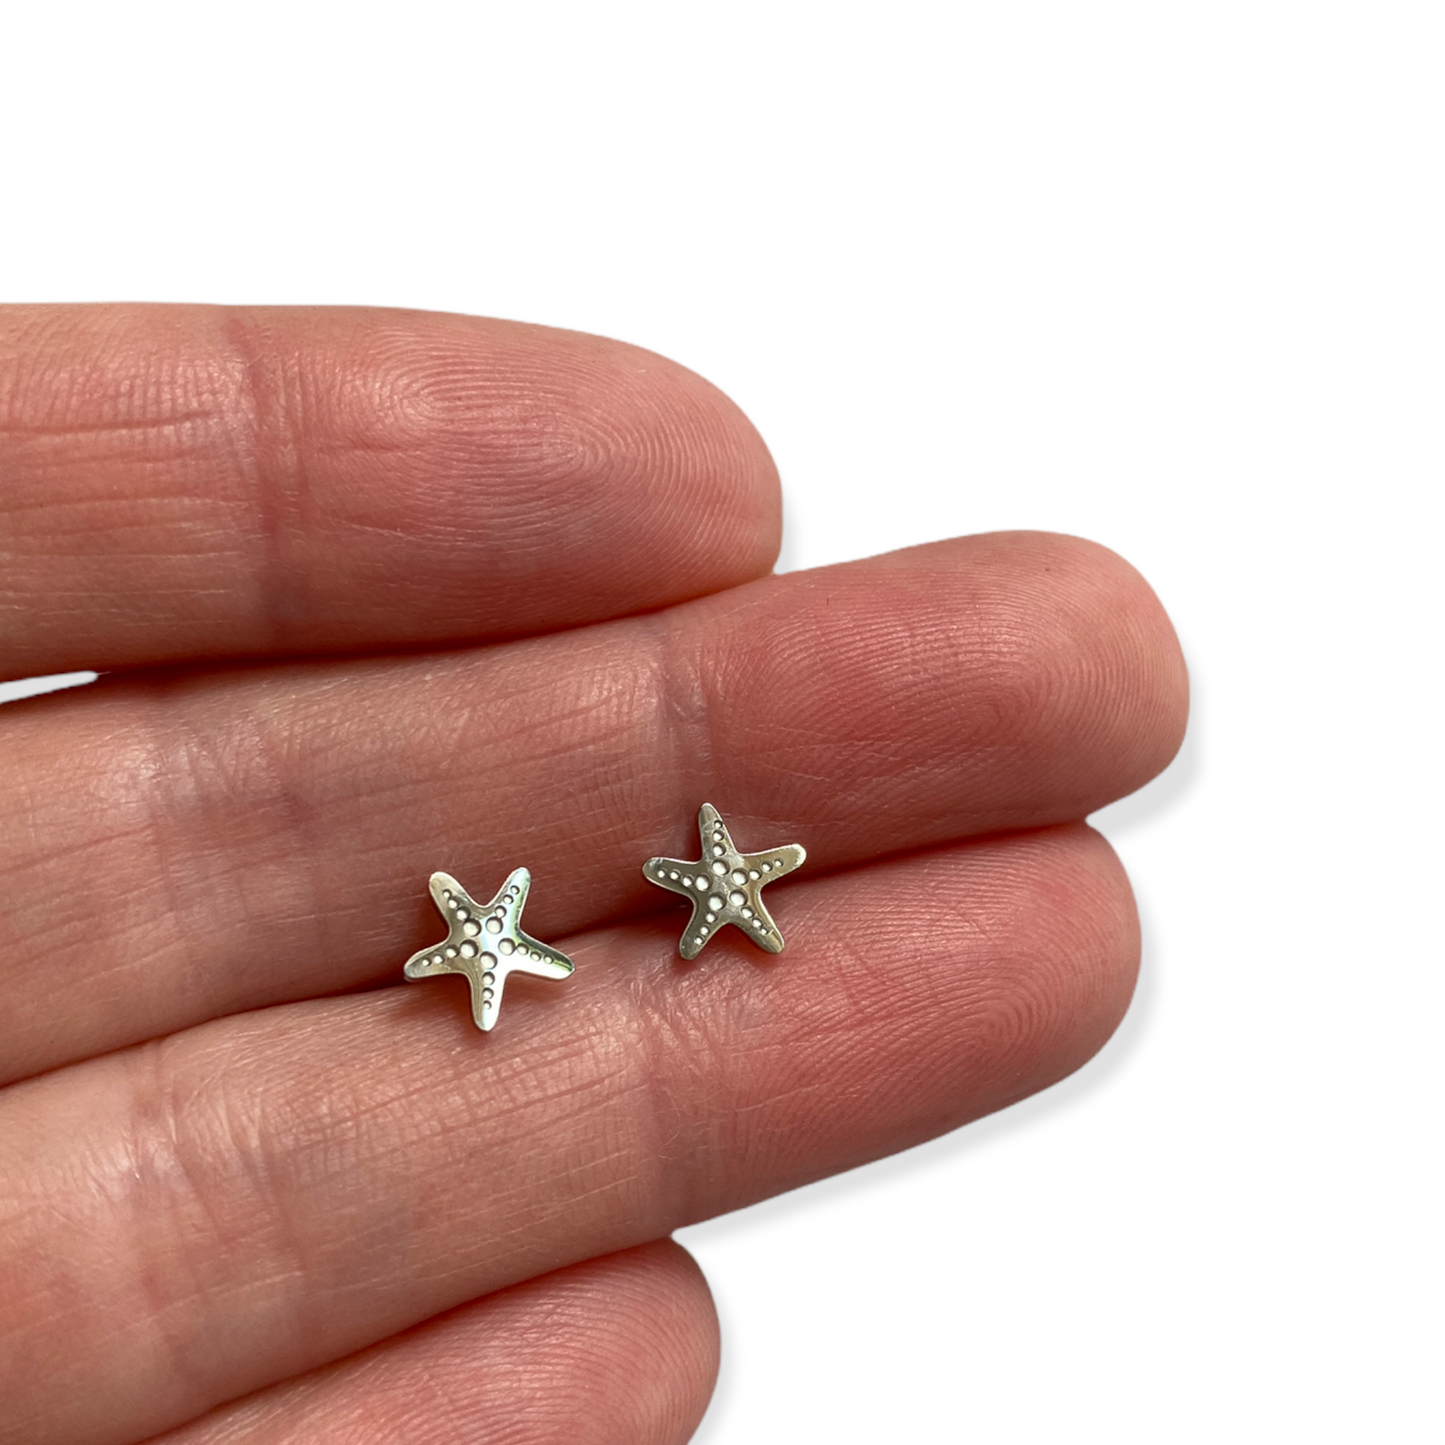 Starfish Studs Silver